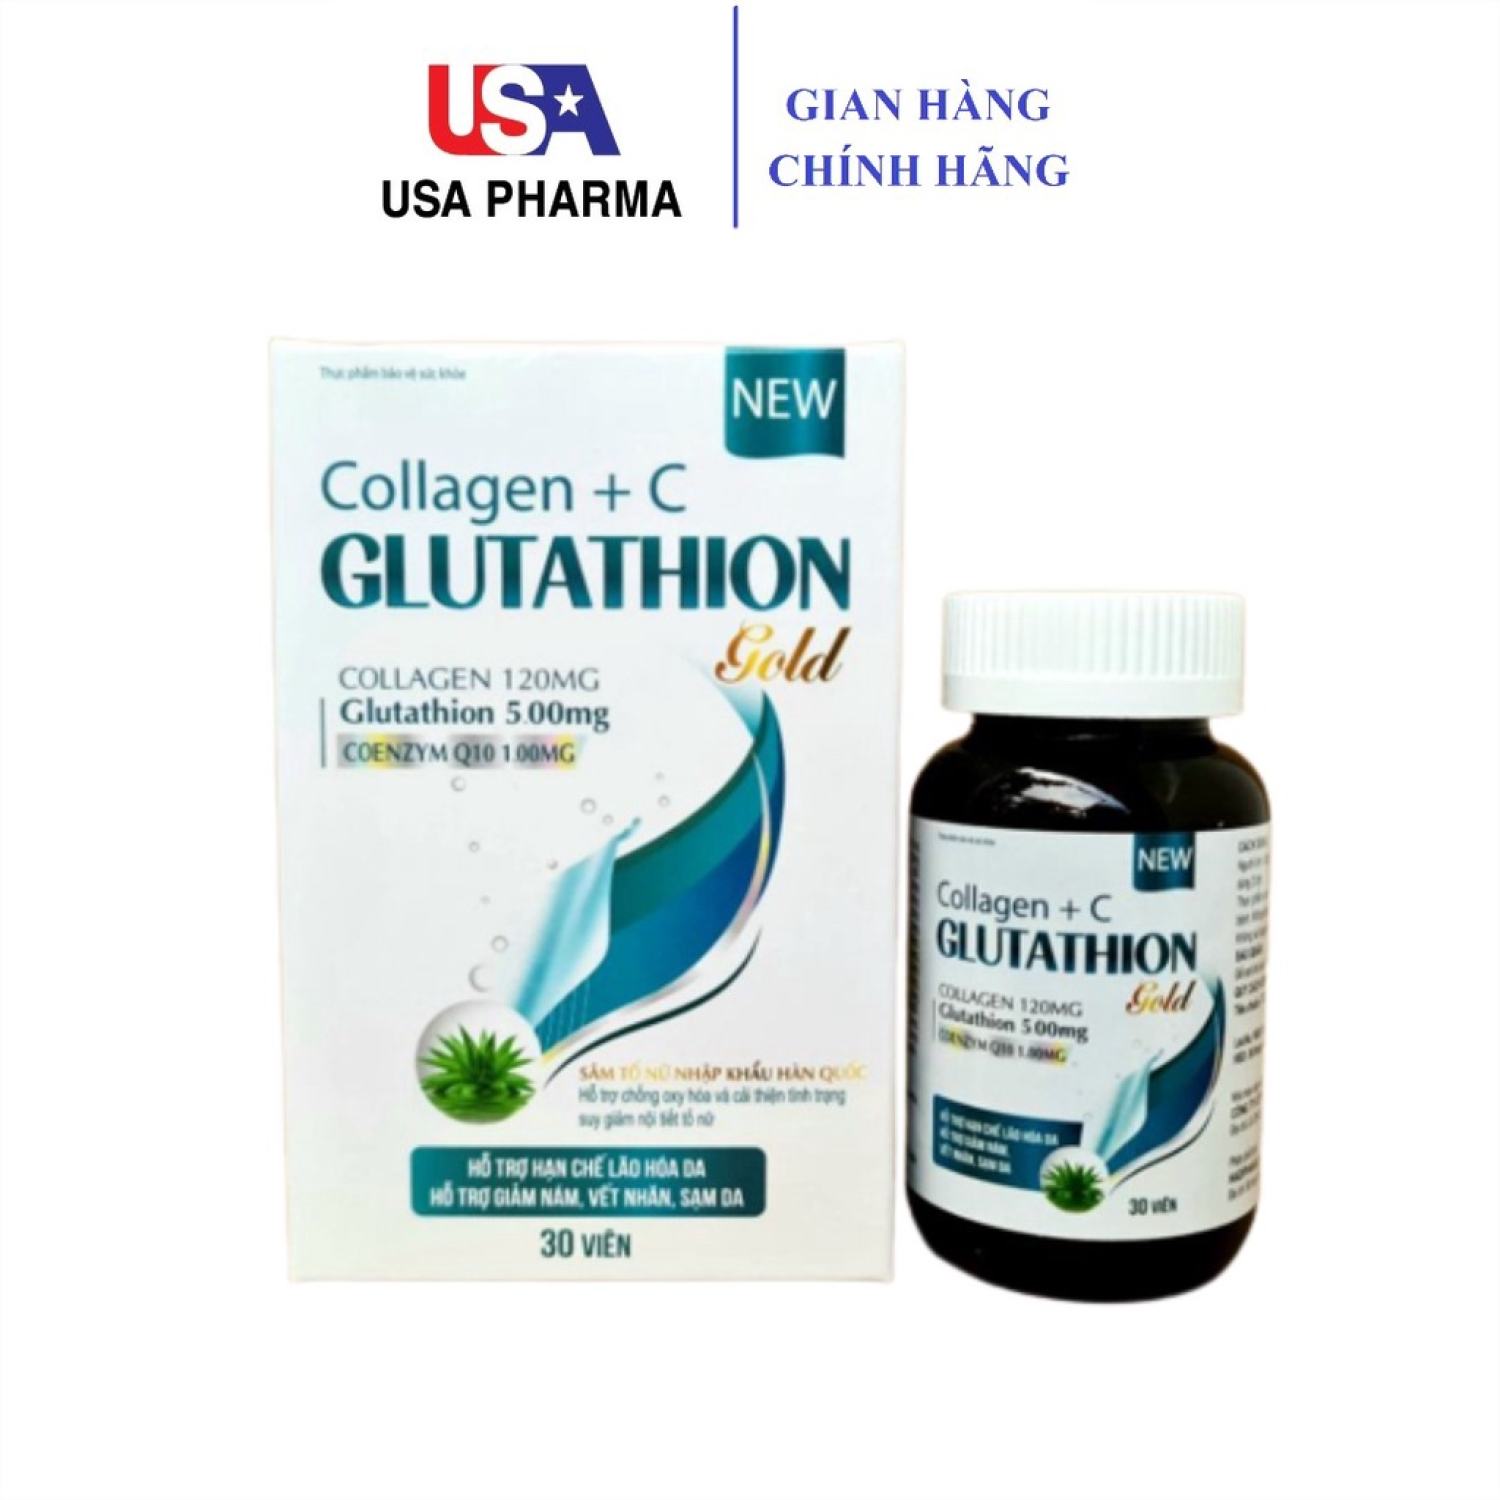 Collagen + C Glutathion Gold cung cấp độ ẩm cho da